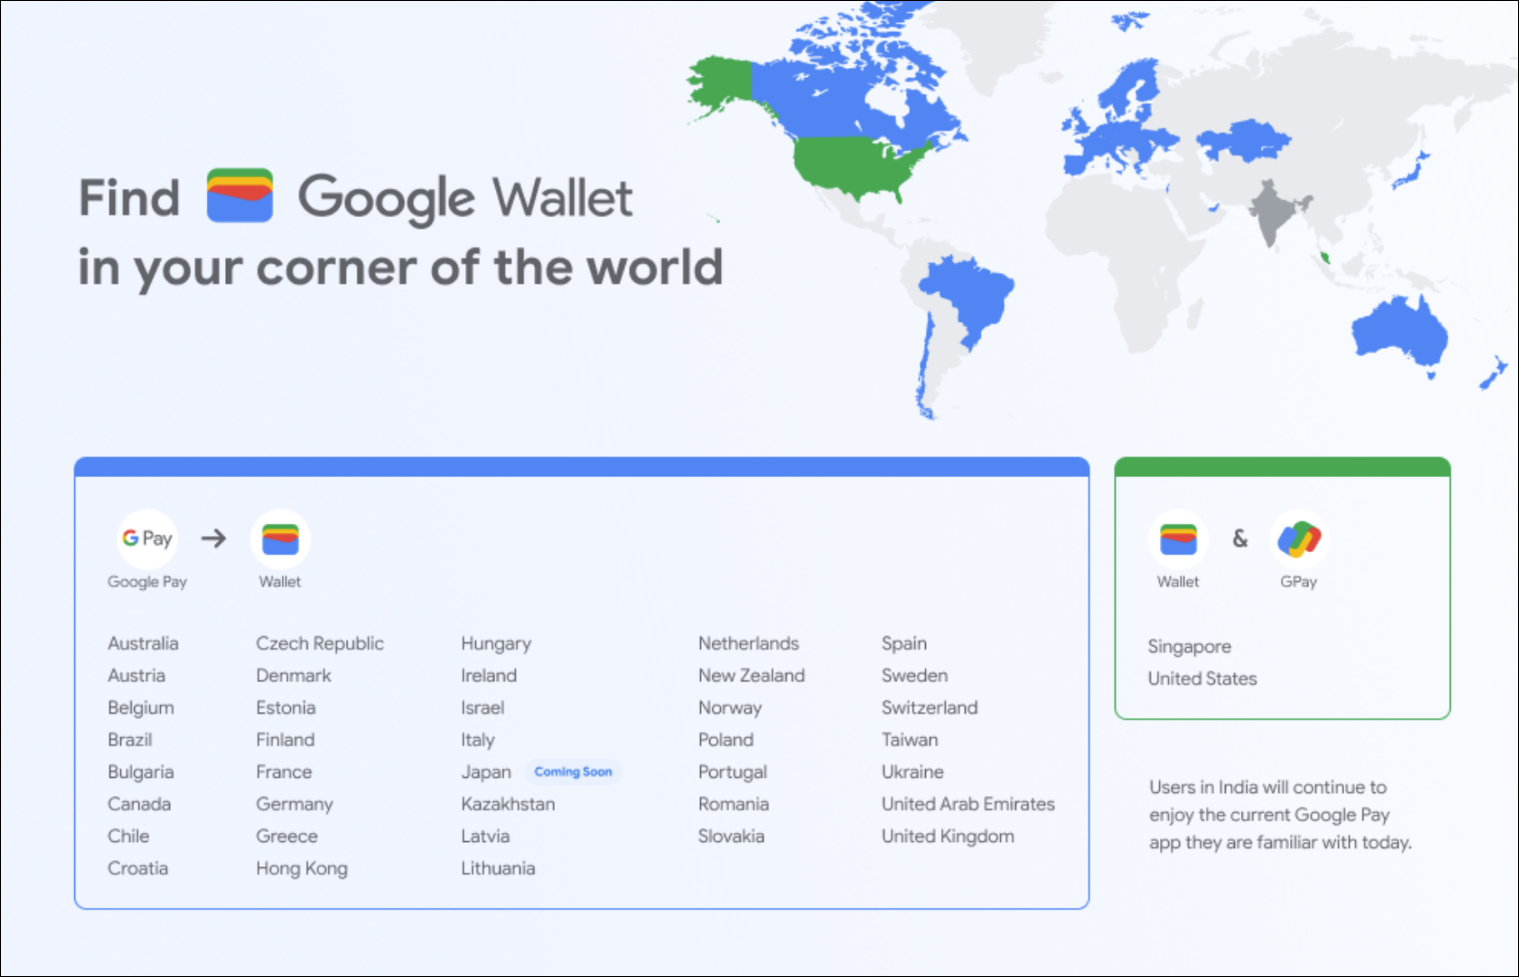 Implementación mundial de Google Wallet